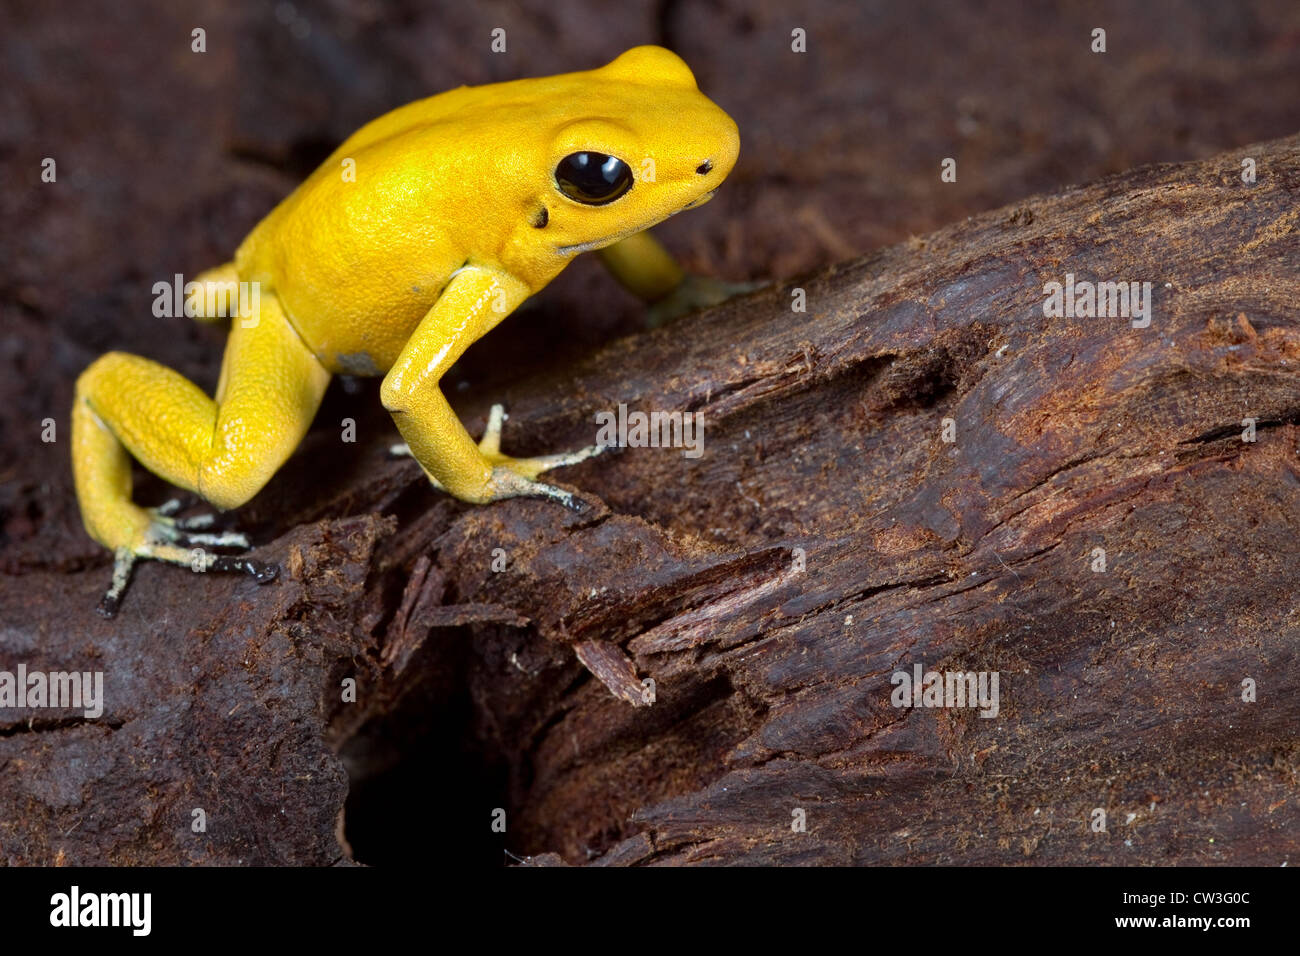 Frosch sehr giftige Tier mit Warnung Farben Phyllobates Terribilis  Kolumbien Amazonas Regenwald giftigen Amphibien zu vergiften  Stockfotografie - Alamy